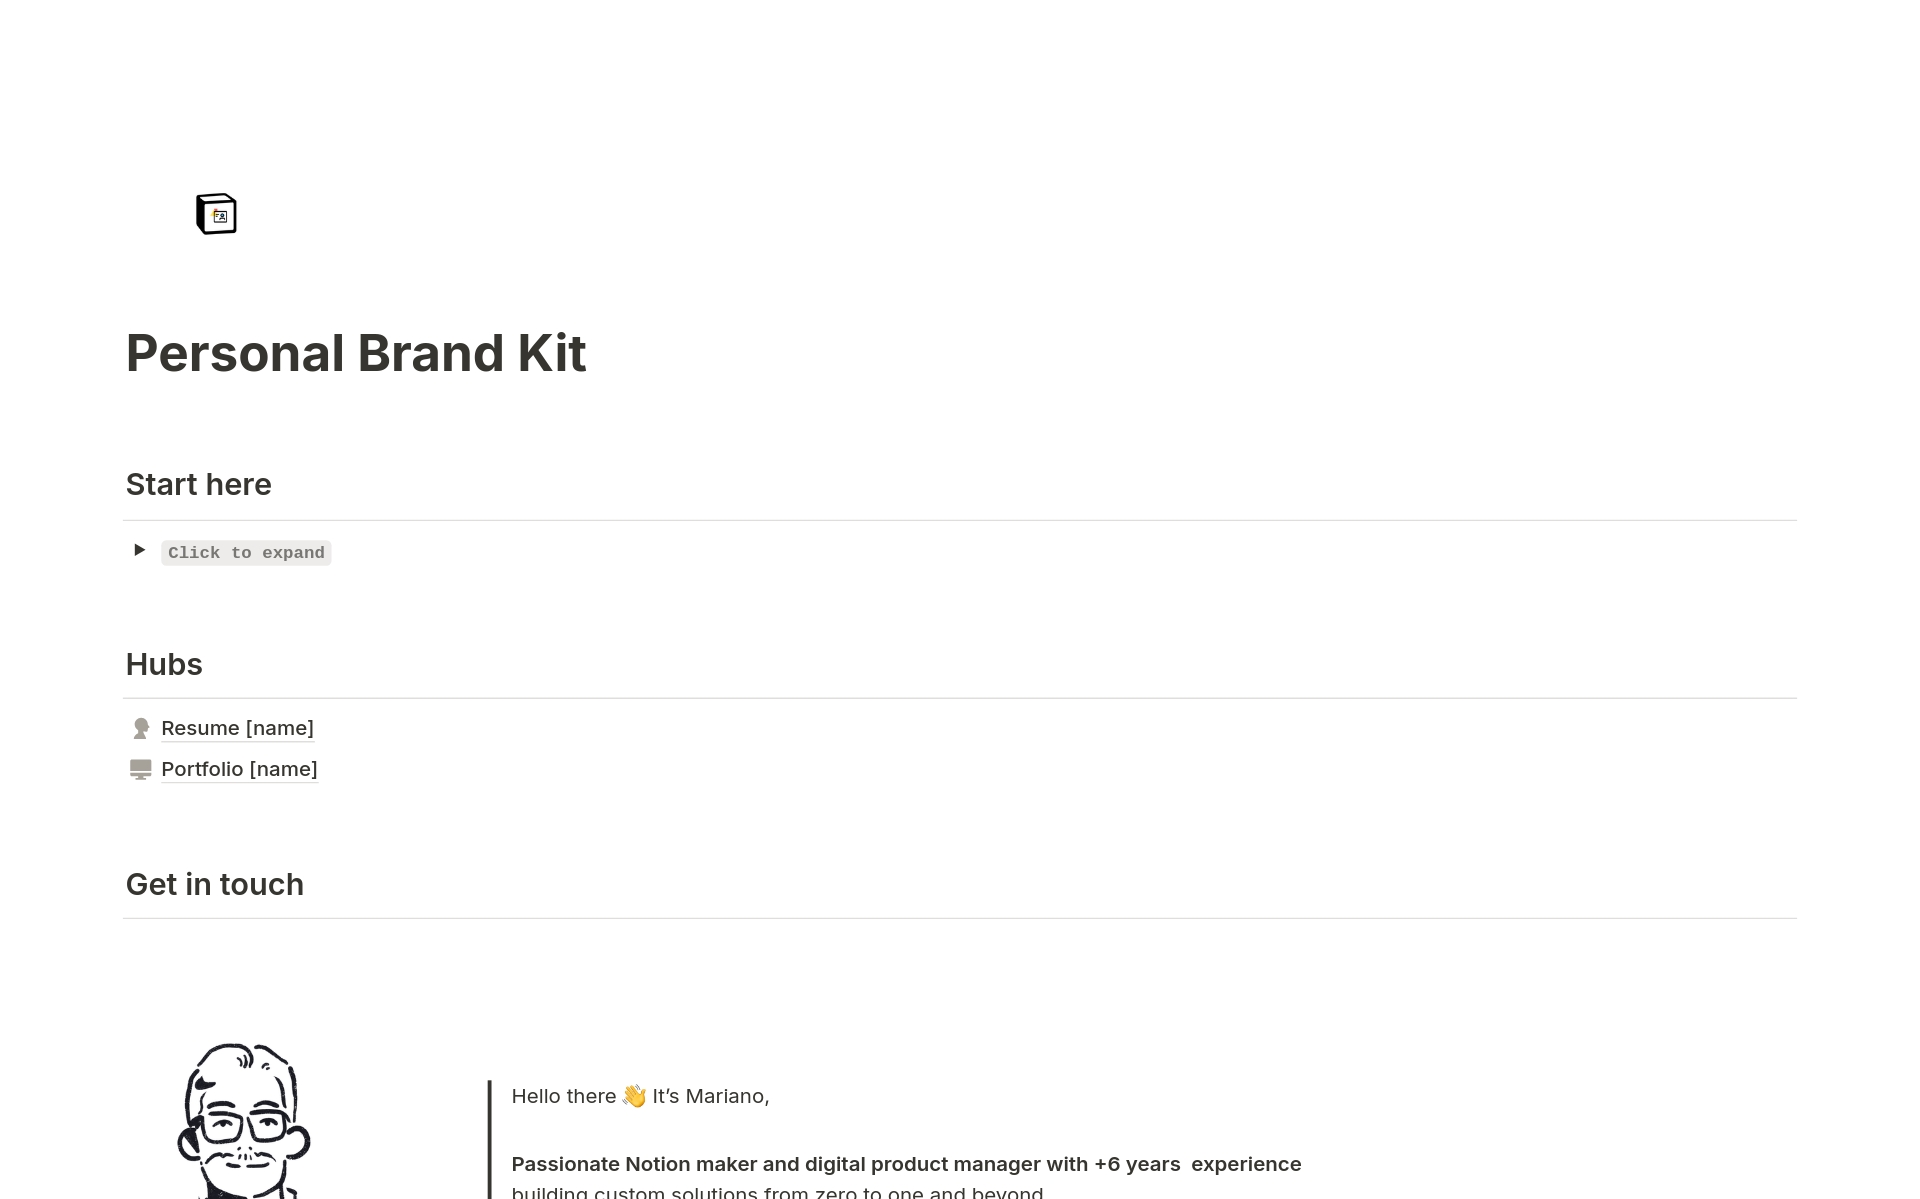 Vista previa de una plantilla para Personal Brand Kit